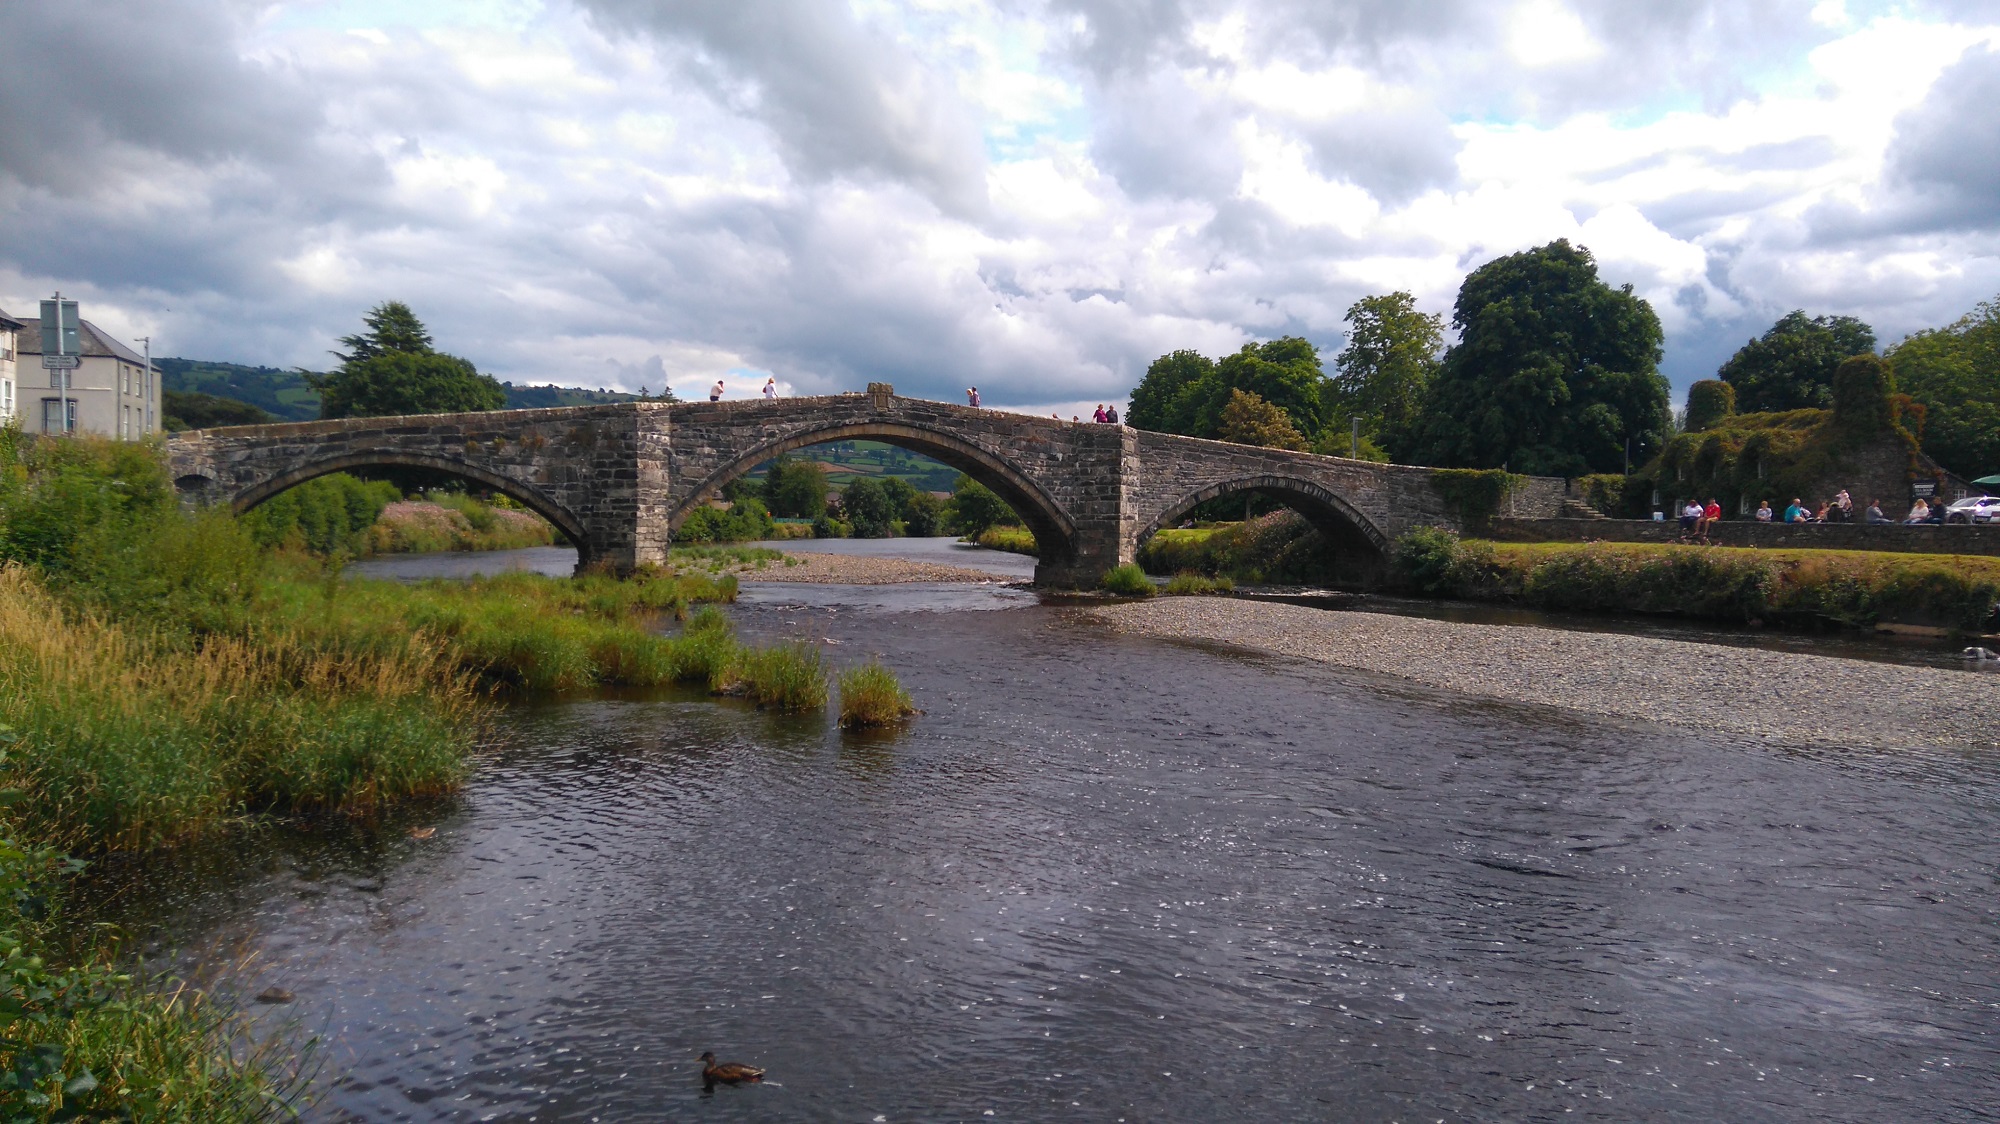 A historic stone bridge across the River Conwy at Llanrwst.